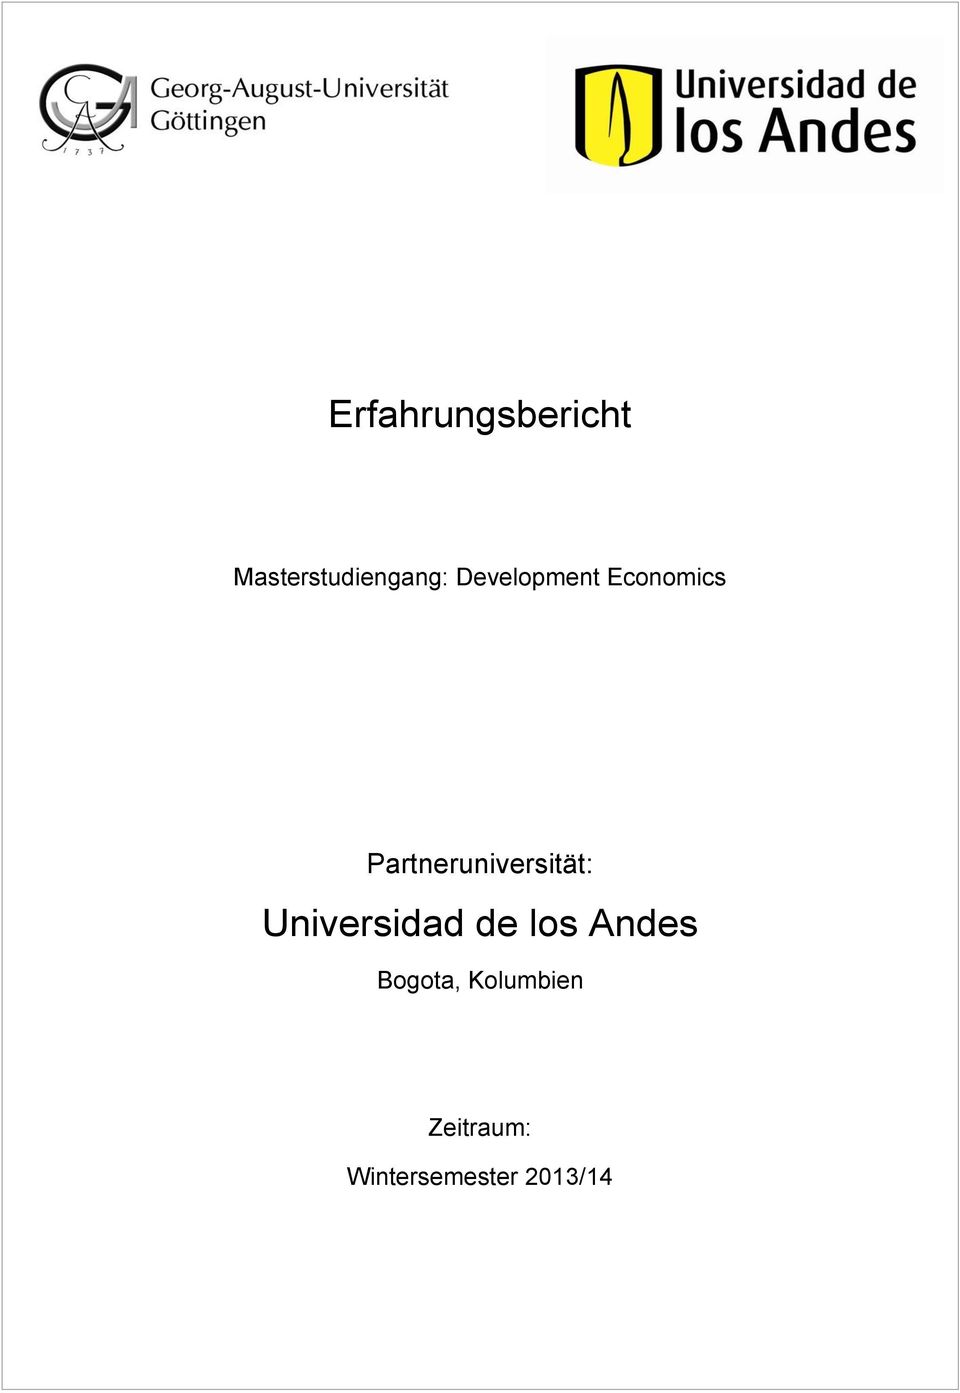 Partneruniversität: Universidad de los